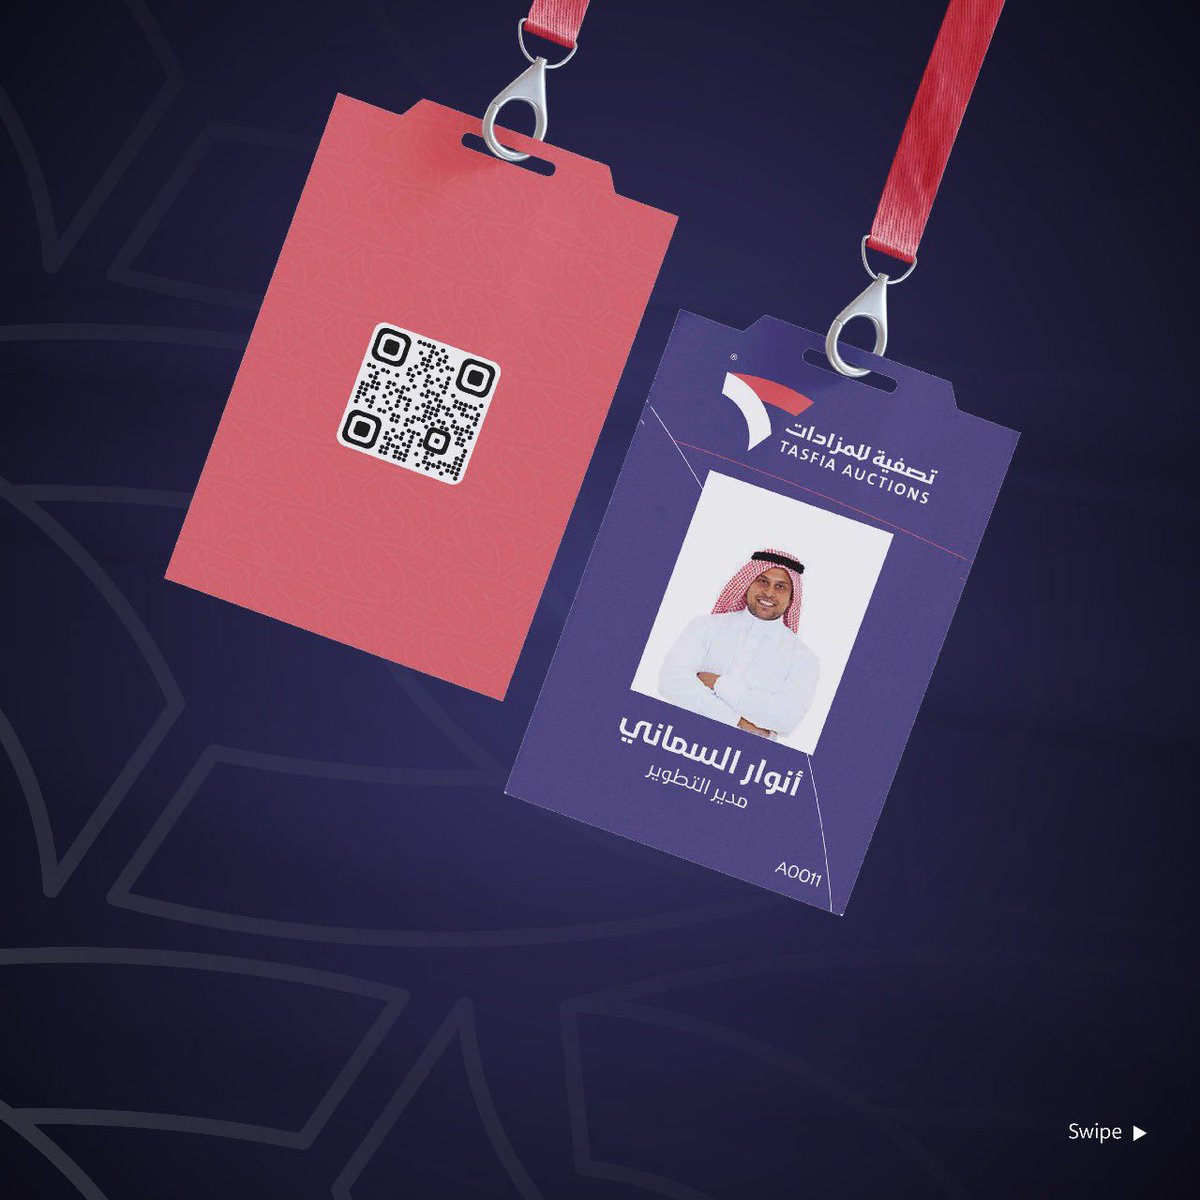 Taghtya Auctions Full branding 
Location: Saudi Arabia 

#logo #logos #logotype #branding #logodesigner #graphicdesign #graphicdesigner #logodesigns #logomark #logoinspiration #brand #design #identity #brandidentity #branding #logomarks #logotype #brandidentitydesign #logomark